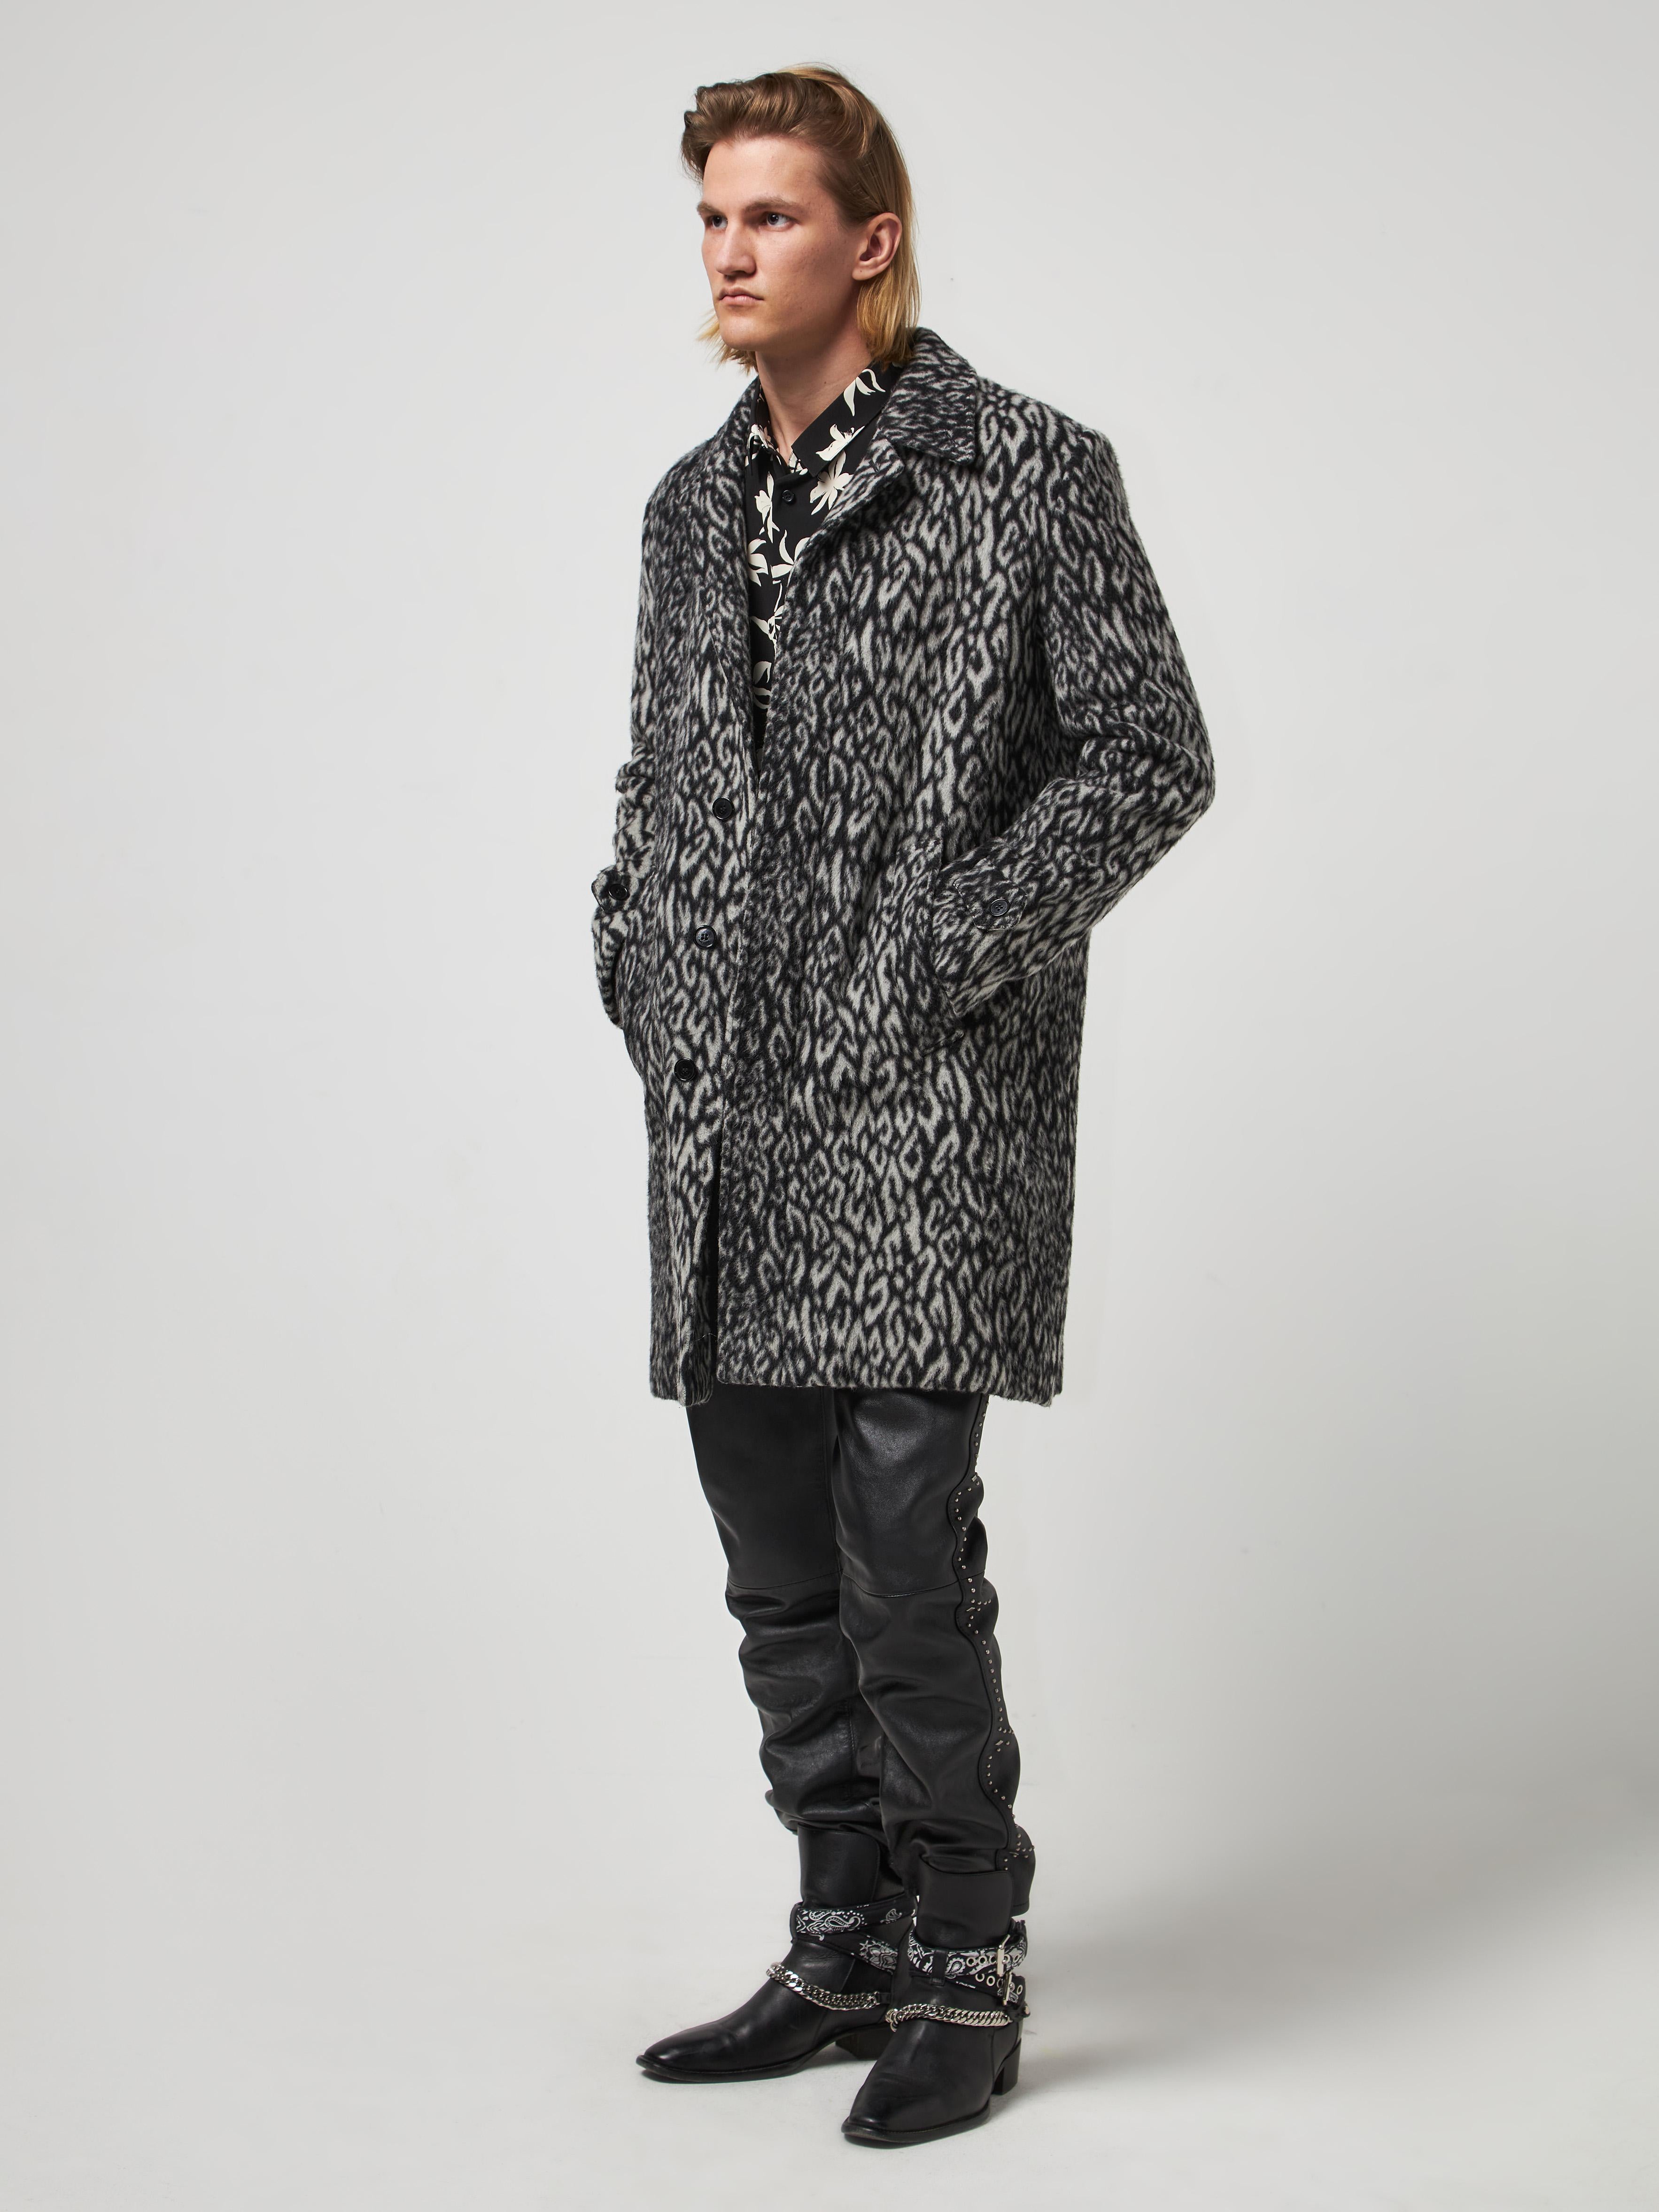 Saint Laurent Paris  Black Gray Elongated Button Woolen Coat
Size marked: 48
Condition: Gently used
Material: 66% Wool / 17% Polyamide  / 17% Viscose / 60% Cupro / 40% Cotton
Measurements: Shoulder to shoulder (cm) 46/ pit to pit (cm) 49/ Length